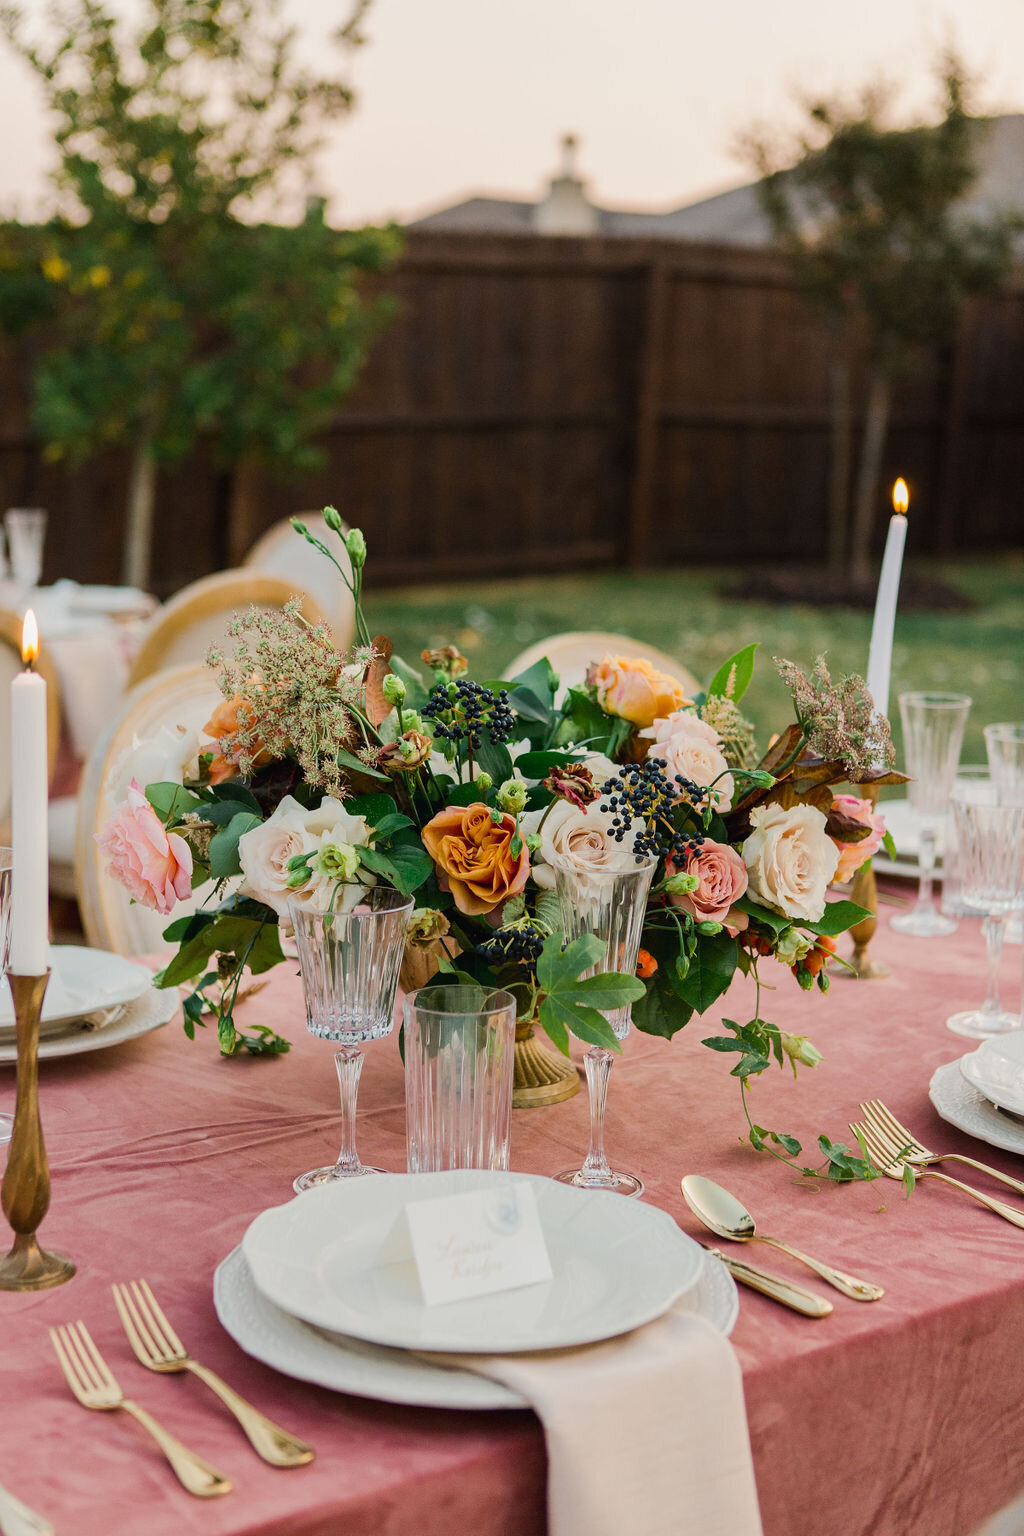 Wedding Reception Details at Fort Worth backyard wedding with florals by Best Fort Worth Florist, Vella Nest Floral Design